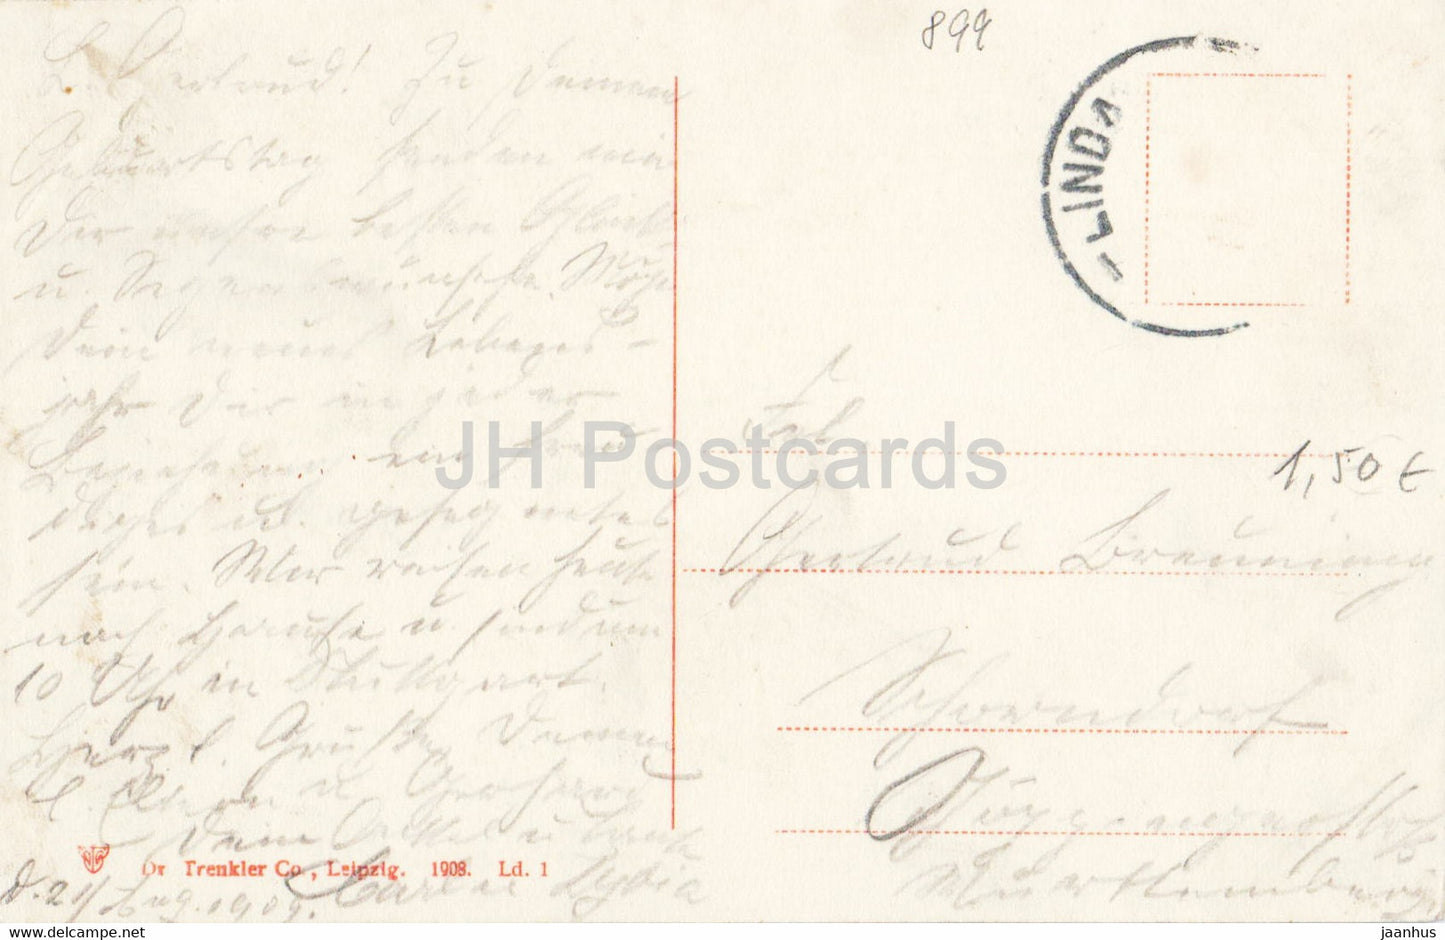 Lindau i B - Hafeneinfahrt - phare - port - navire - carte postale ancienne - 1908 - Allemagne - utilisé